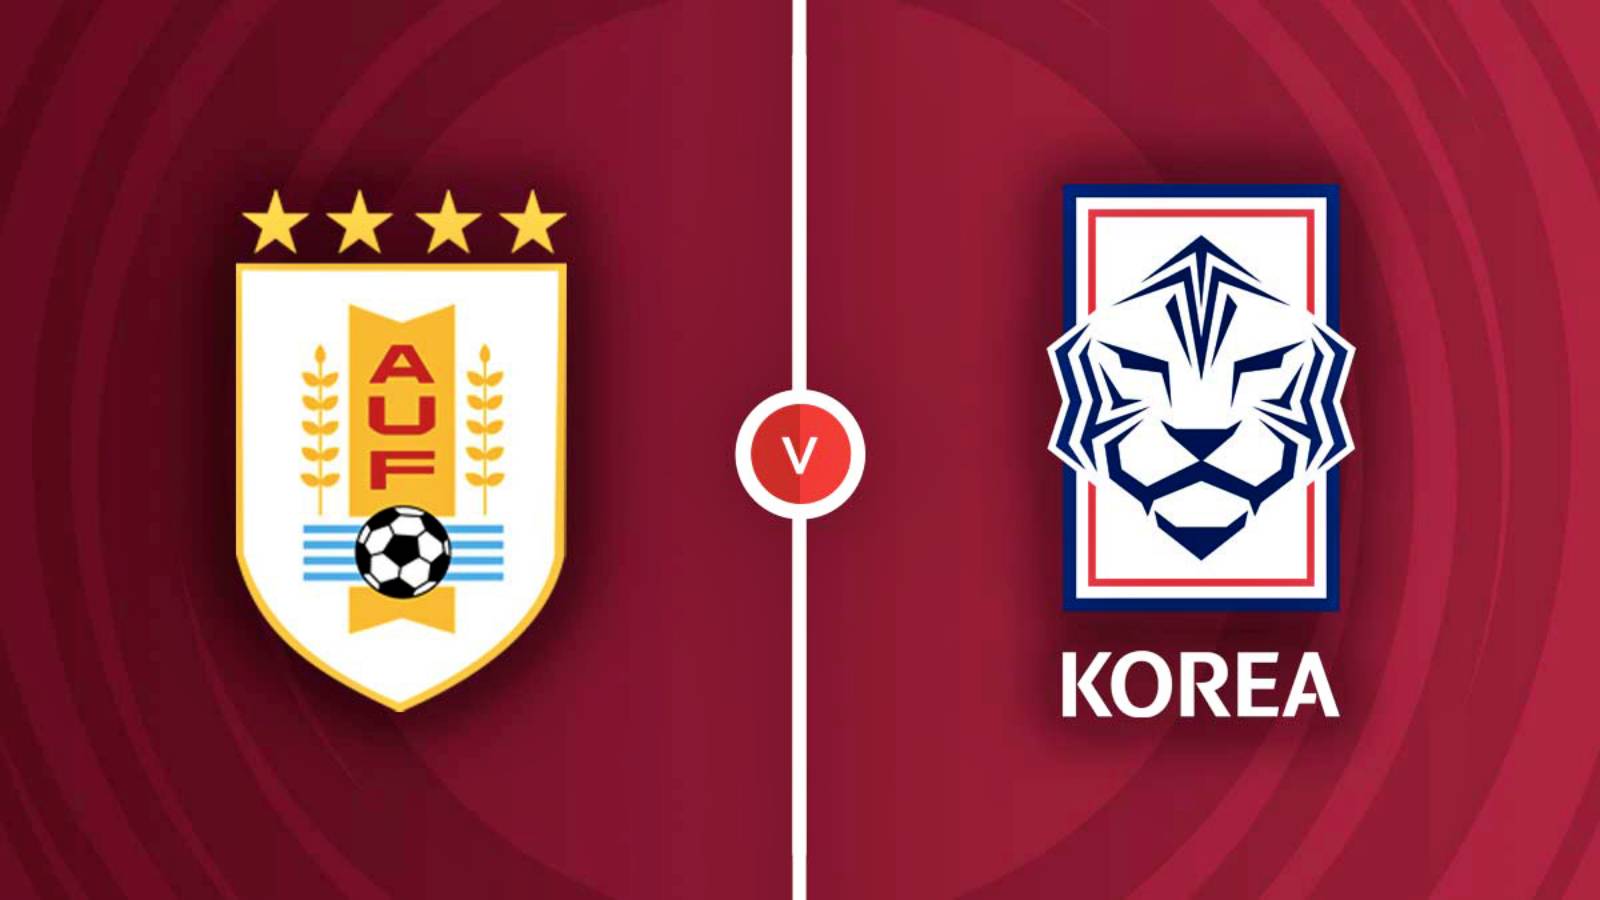 URUGUAY – SOUTH KOREA TVR 1 LIVE FOOTBALL WORLD CHAMPIONSHIP 2022 QATAR